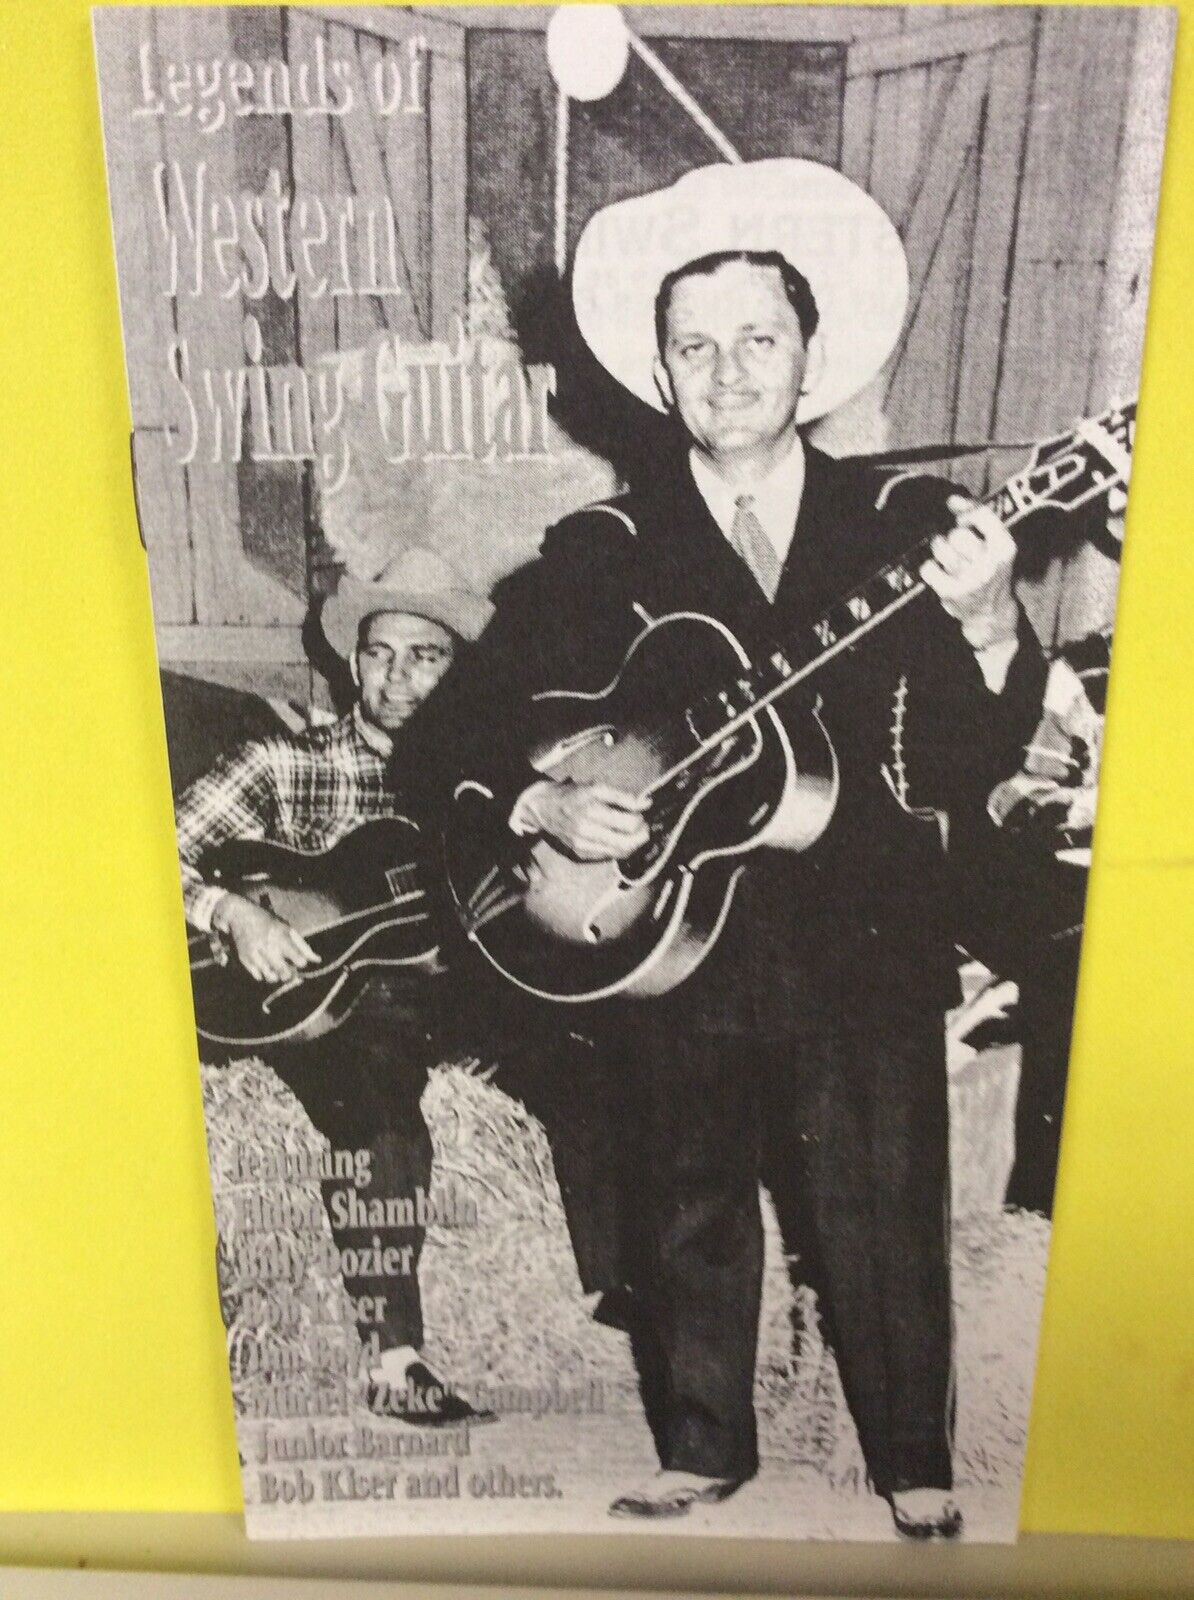 Legends of Western Swing Guitar Shamblin Hill Kiser Cambell Garcia Wyble Barnard